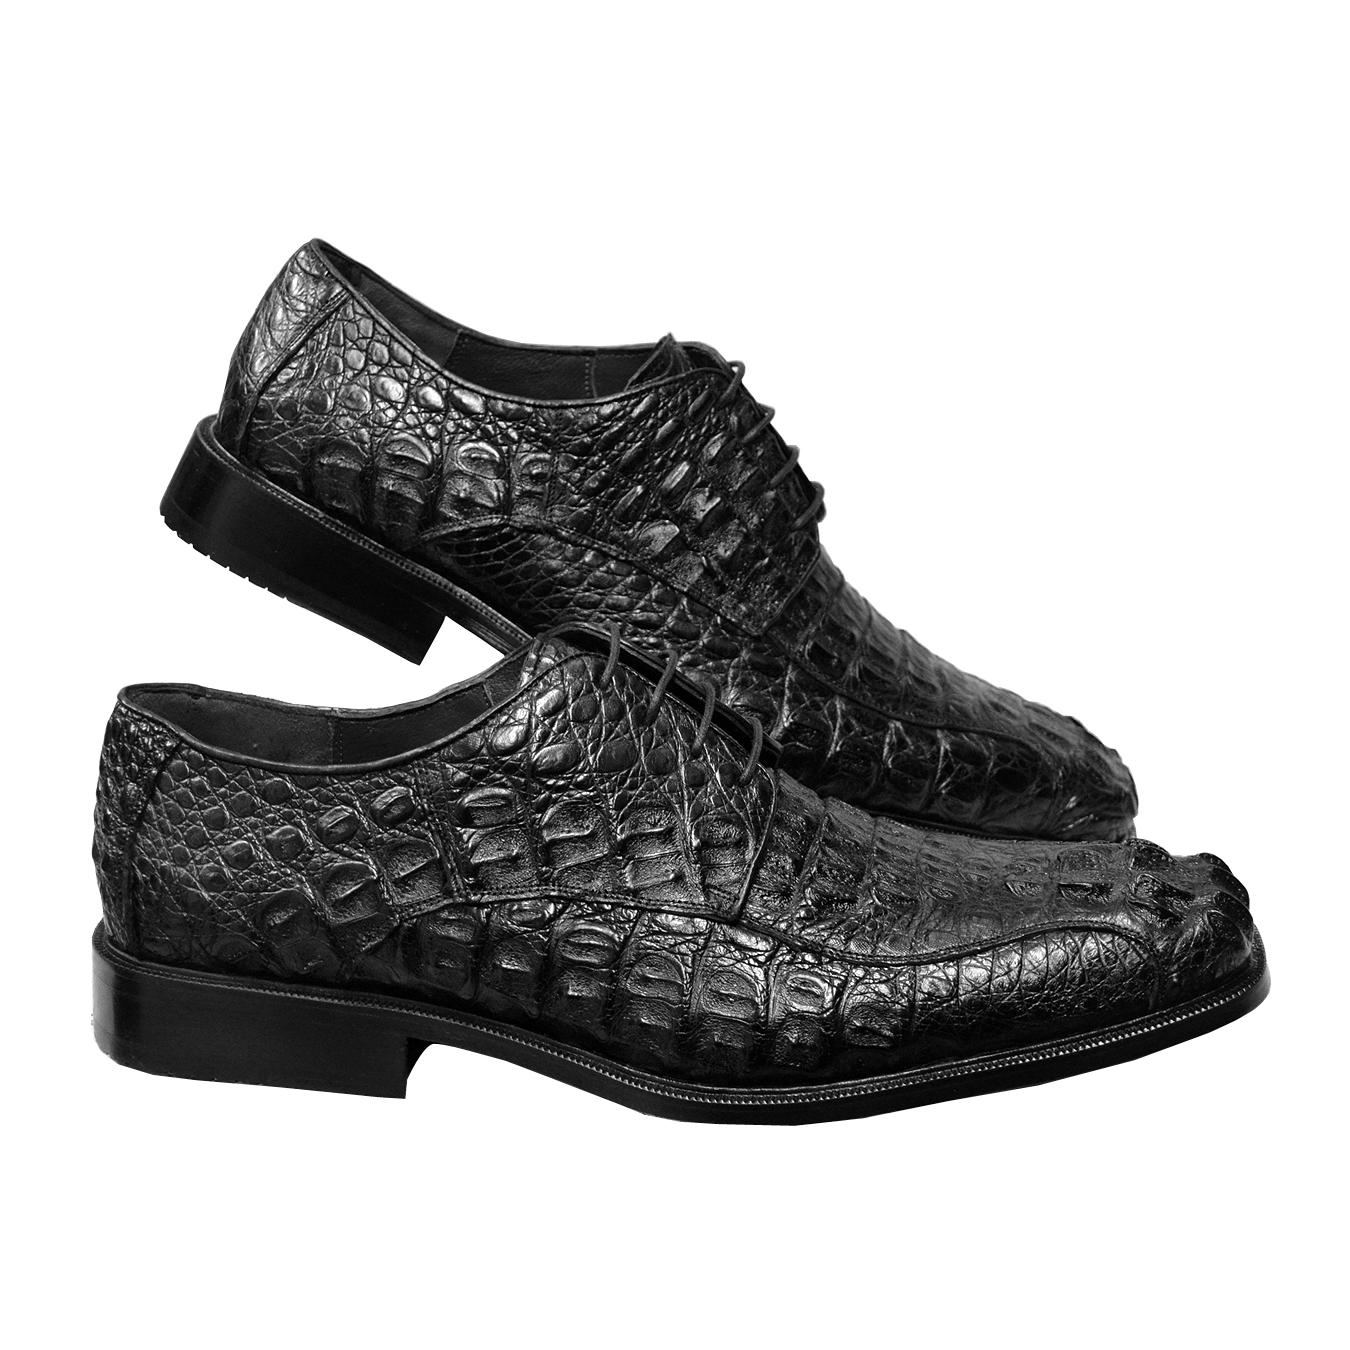 La Scarpa Black Hornback Crocodile Skin Shoes, The Best Men's Crocodile  Shoes